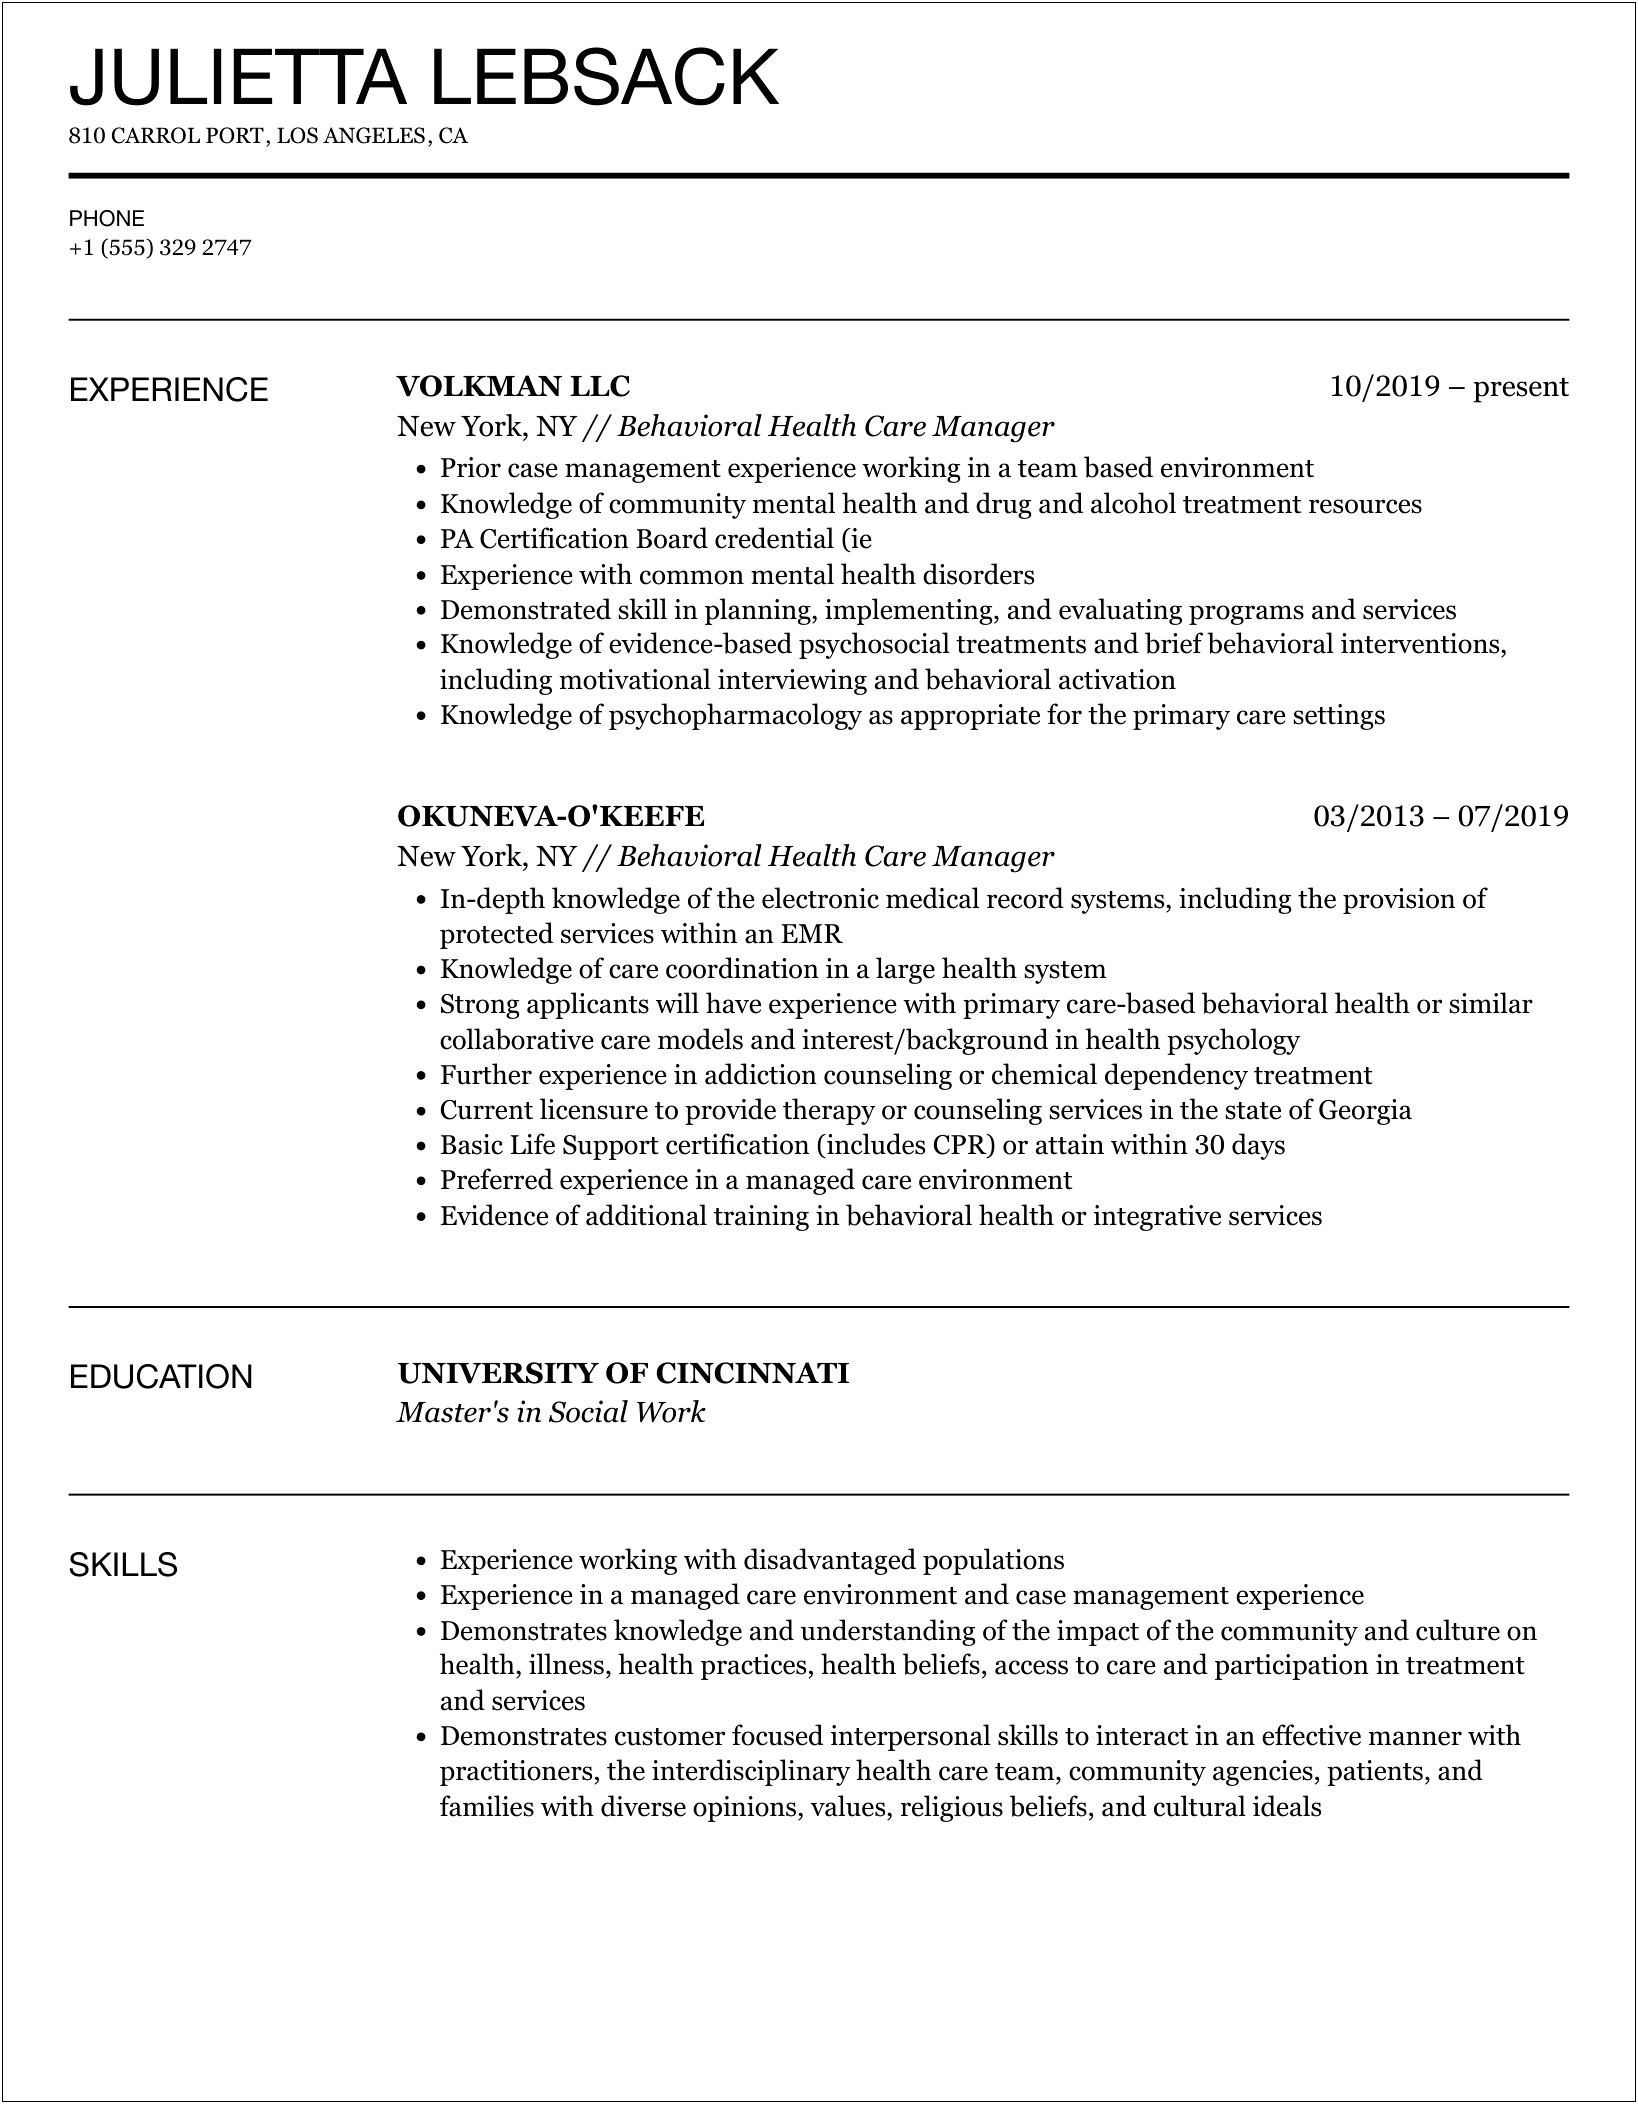 Resume For Mental Health Risk Manager